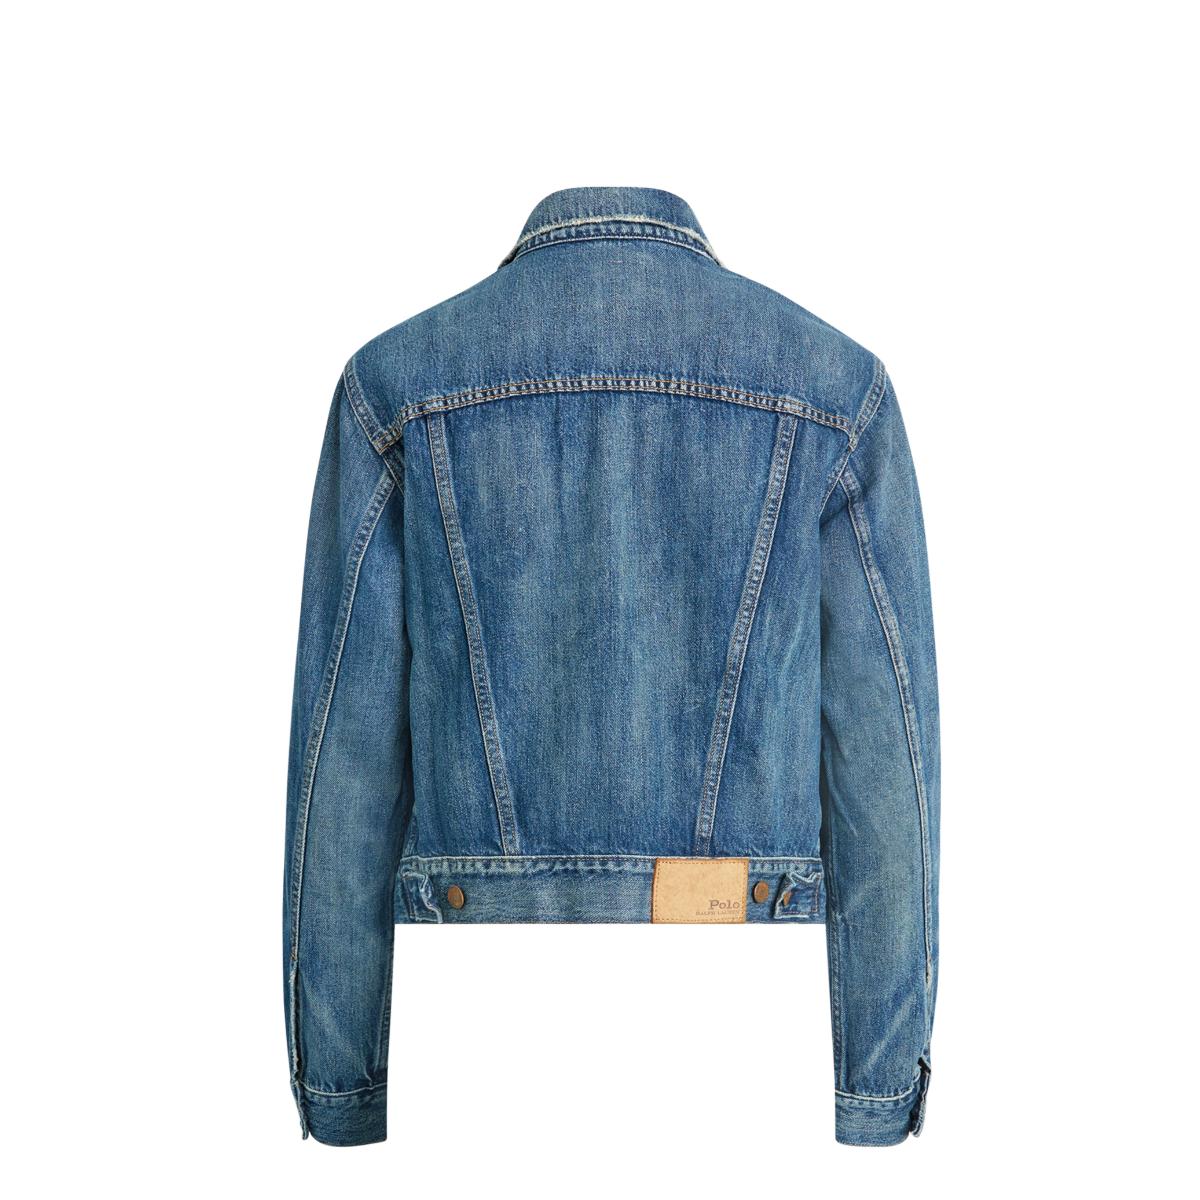 jacket, tumblr, blue jacket, denim, denim jacket, shearling jacket